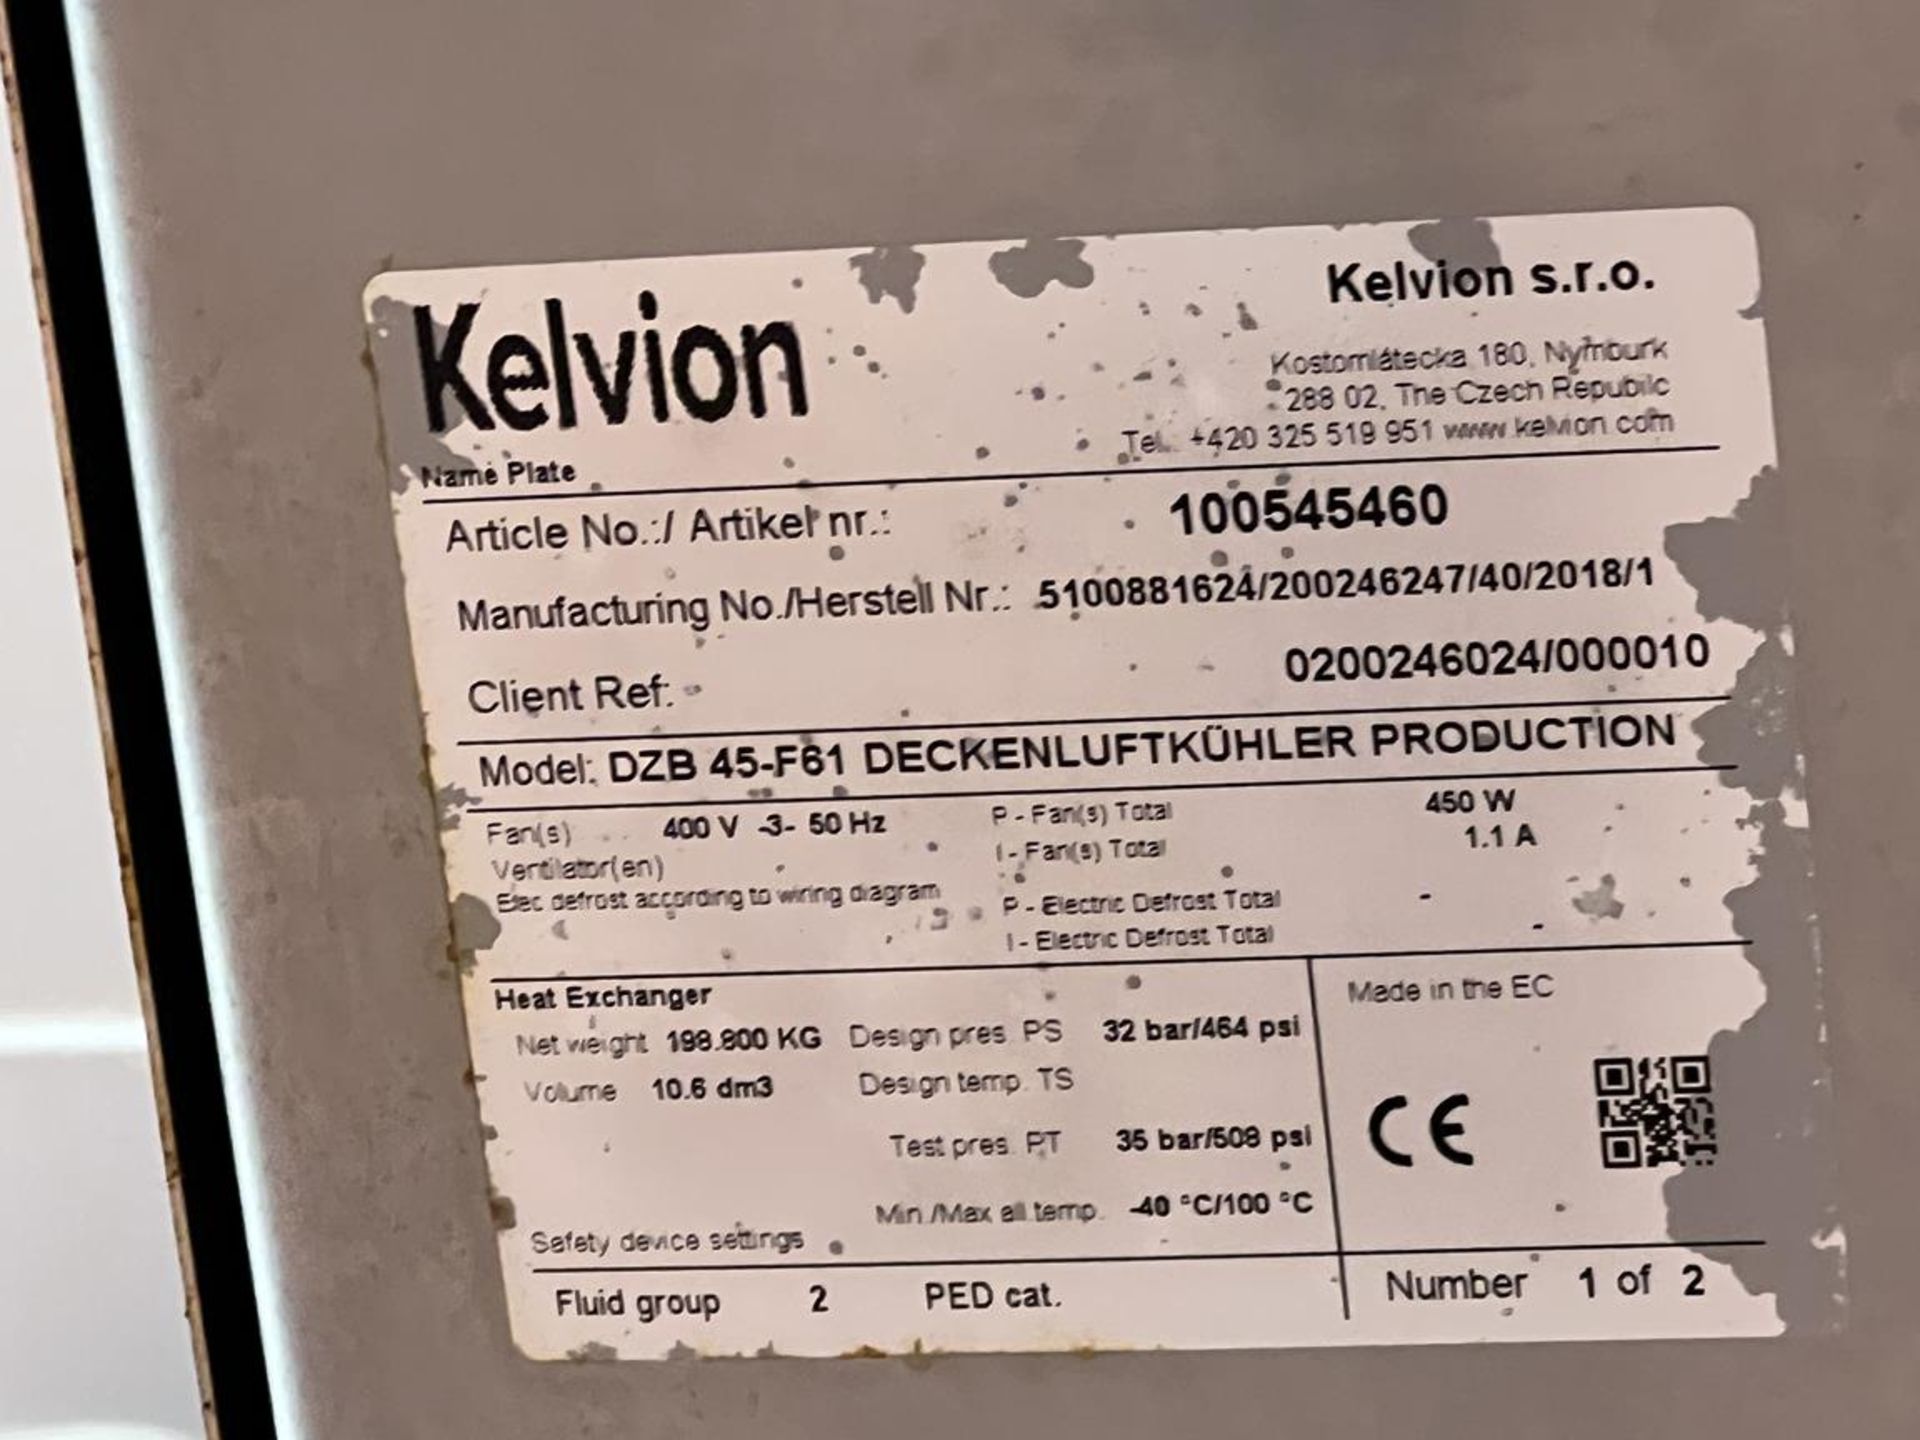 2x (no.) Kelvion, DZB45 F61 Deckenluftkodler single fan condenser units, Serial No. 5100881624/ - Image 5 of 7